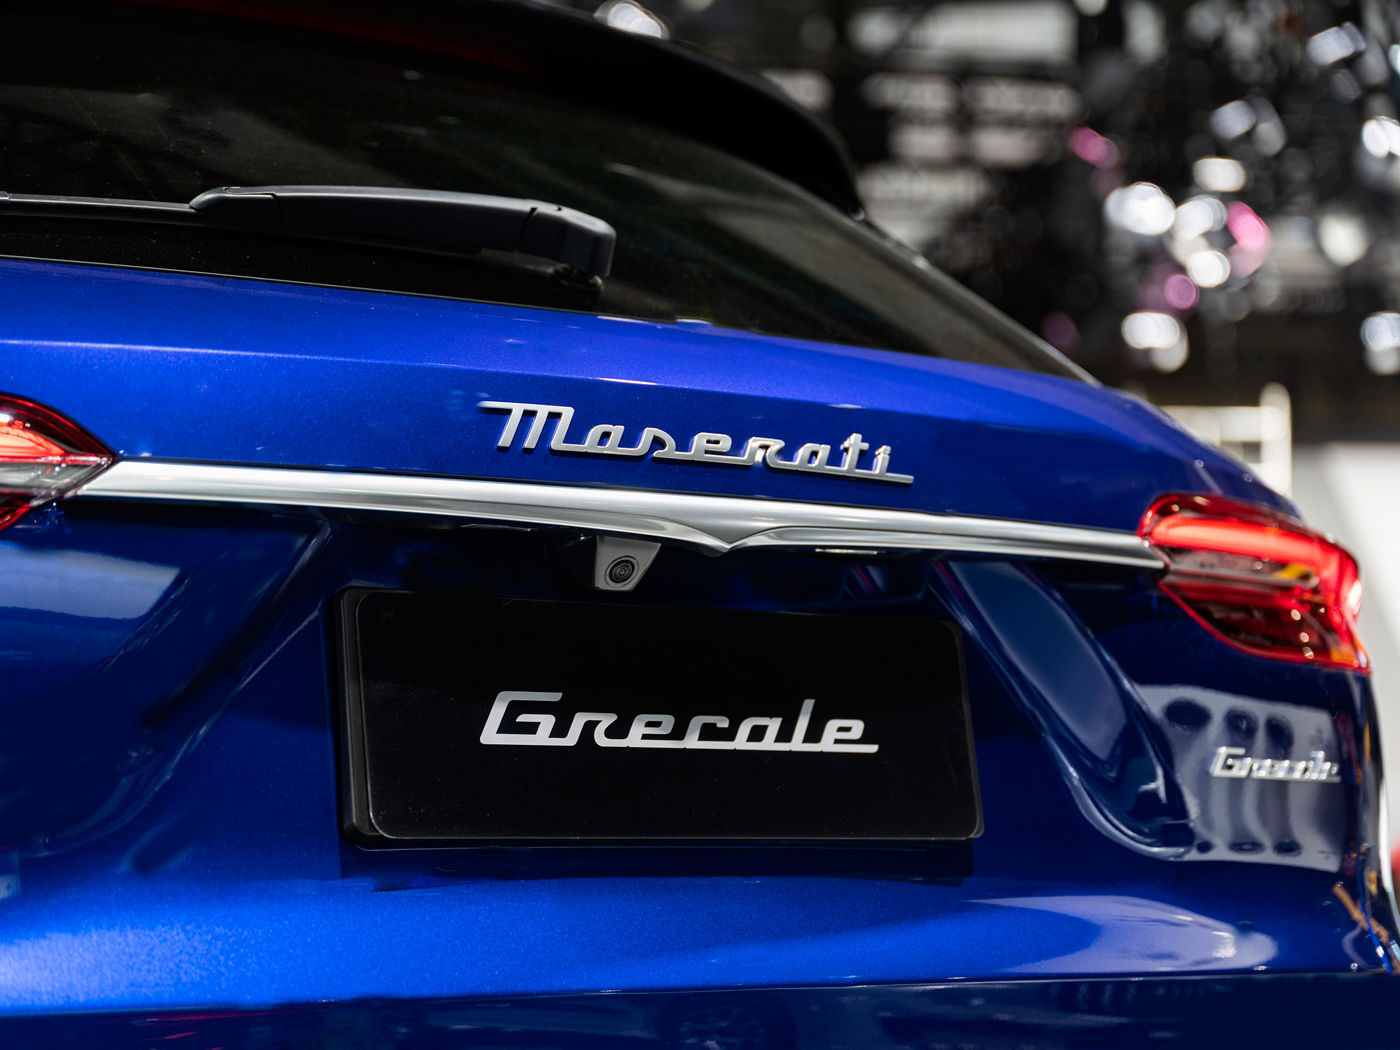 05_全新Grecale GT PrimaSerie首发限量版